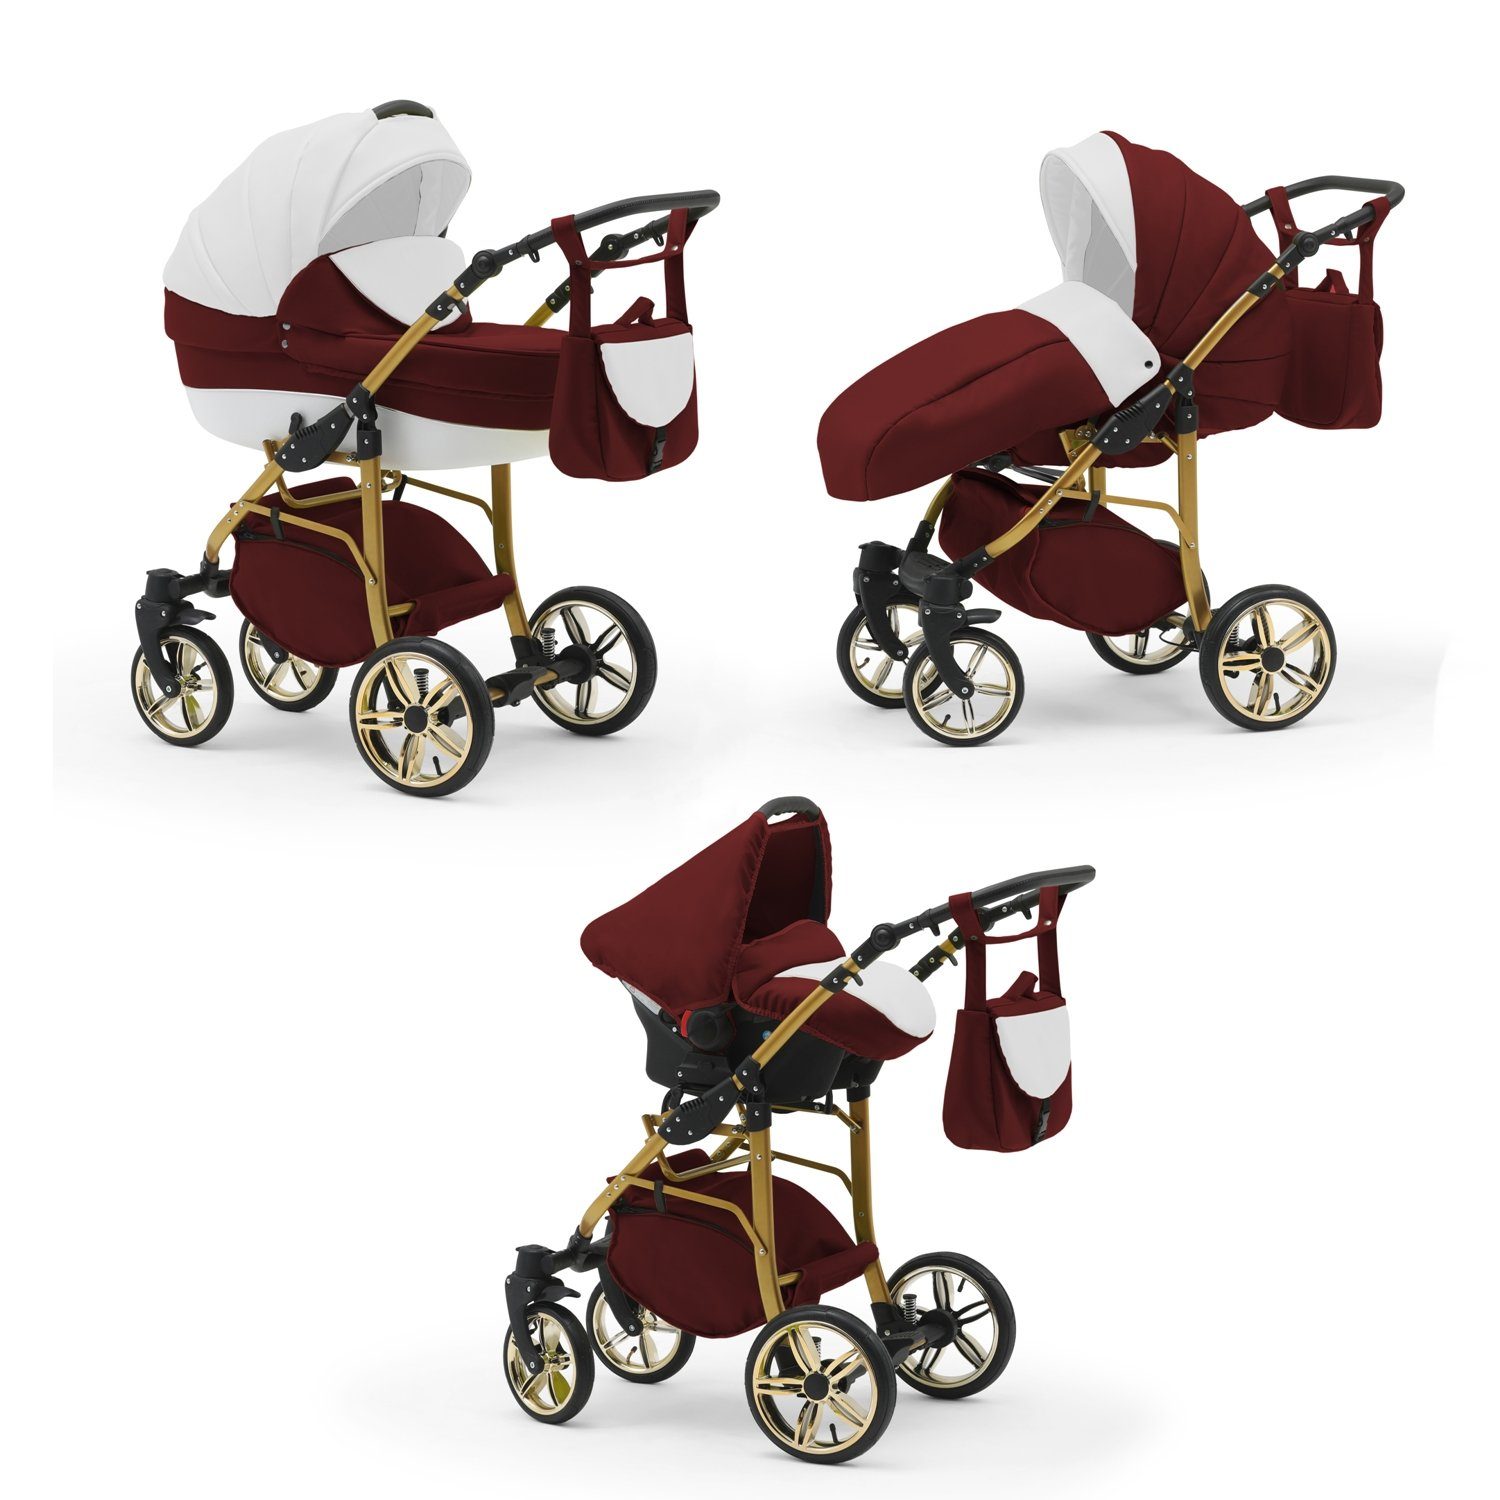 babies-on-wheels Kombi-Kinderwagen 3 in 1 - Teile Cosmo 46 Bordeaux-Rosa-Weiß in Gold- Farben 16 Kinderwagen-Set